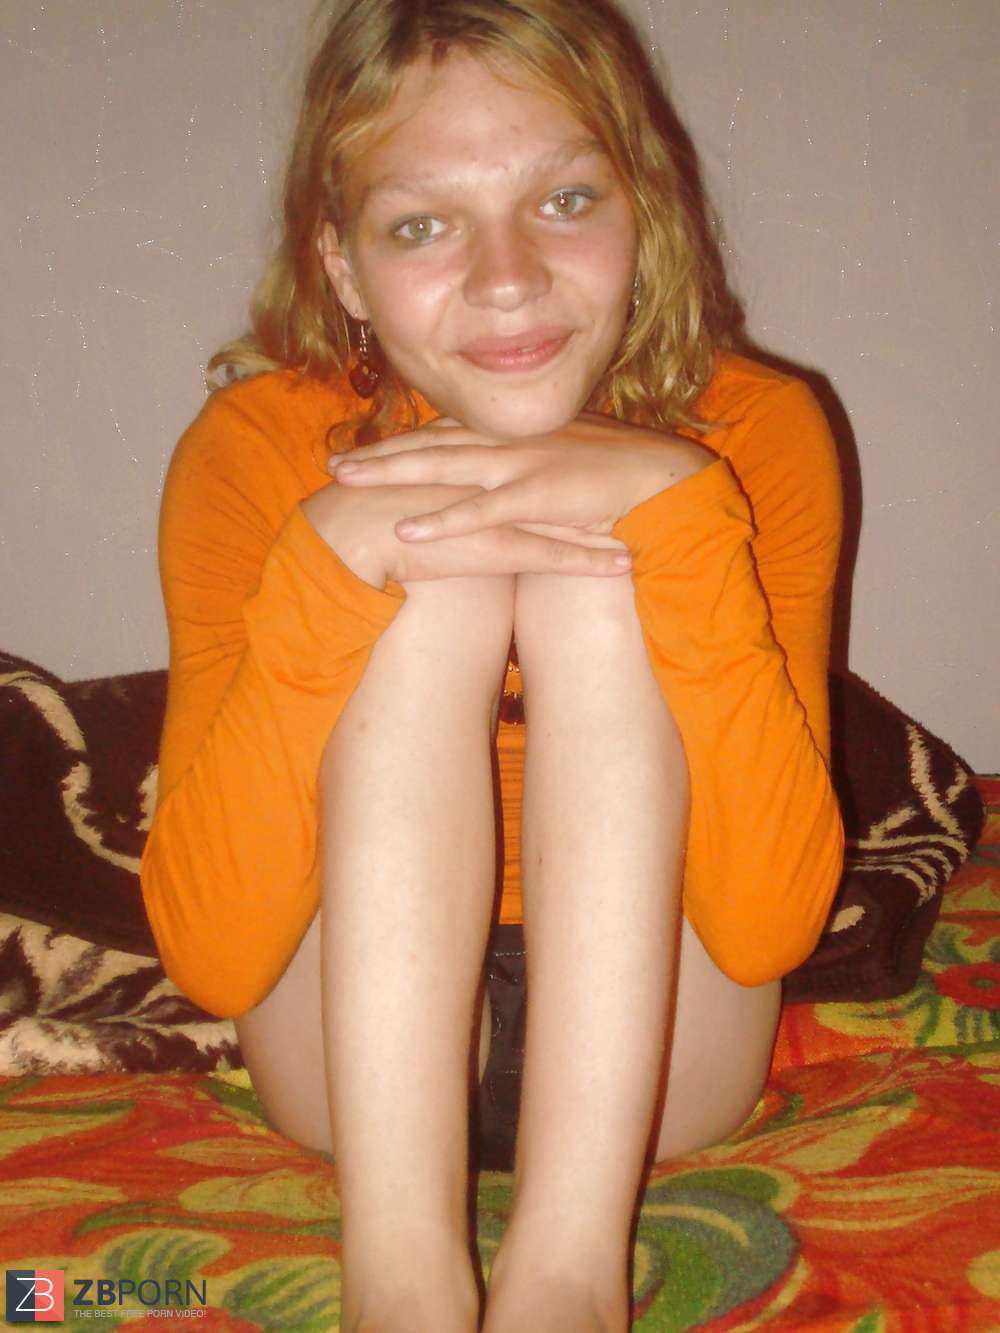 Ukrainian Whore Sveta Zb Porn Free Download Nude Photo Gallery pic picture